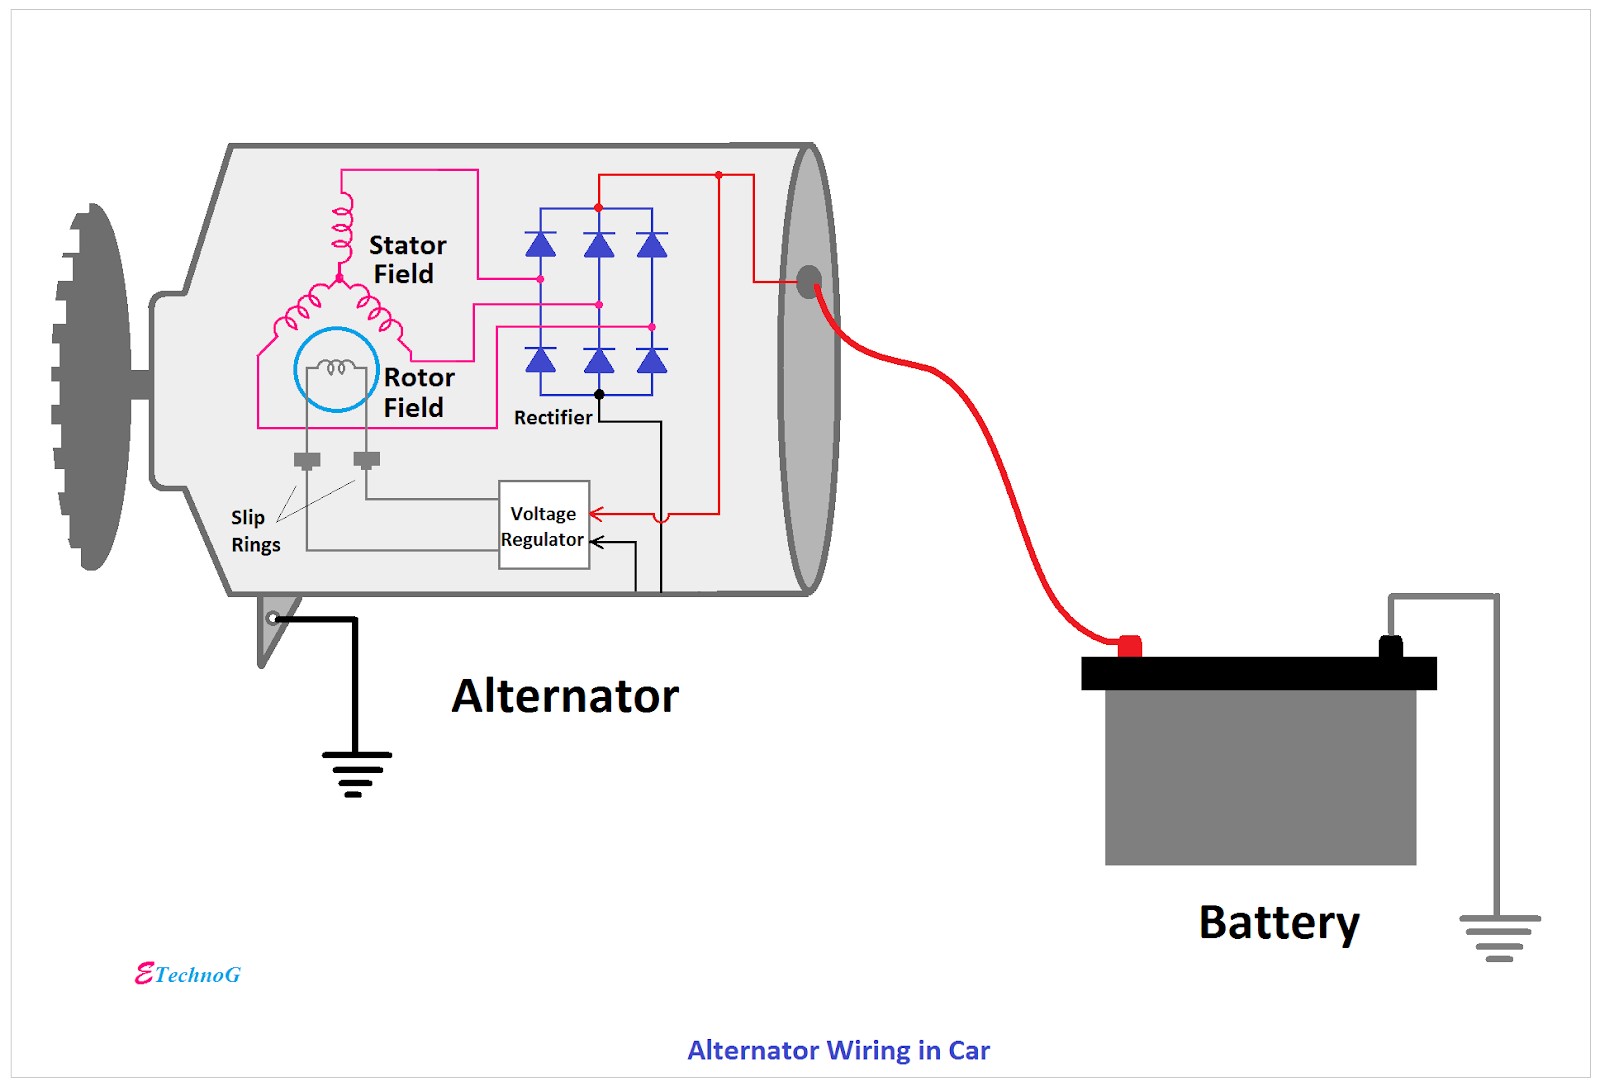 alternator function and alternator wiring diagram in car etechnog